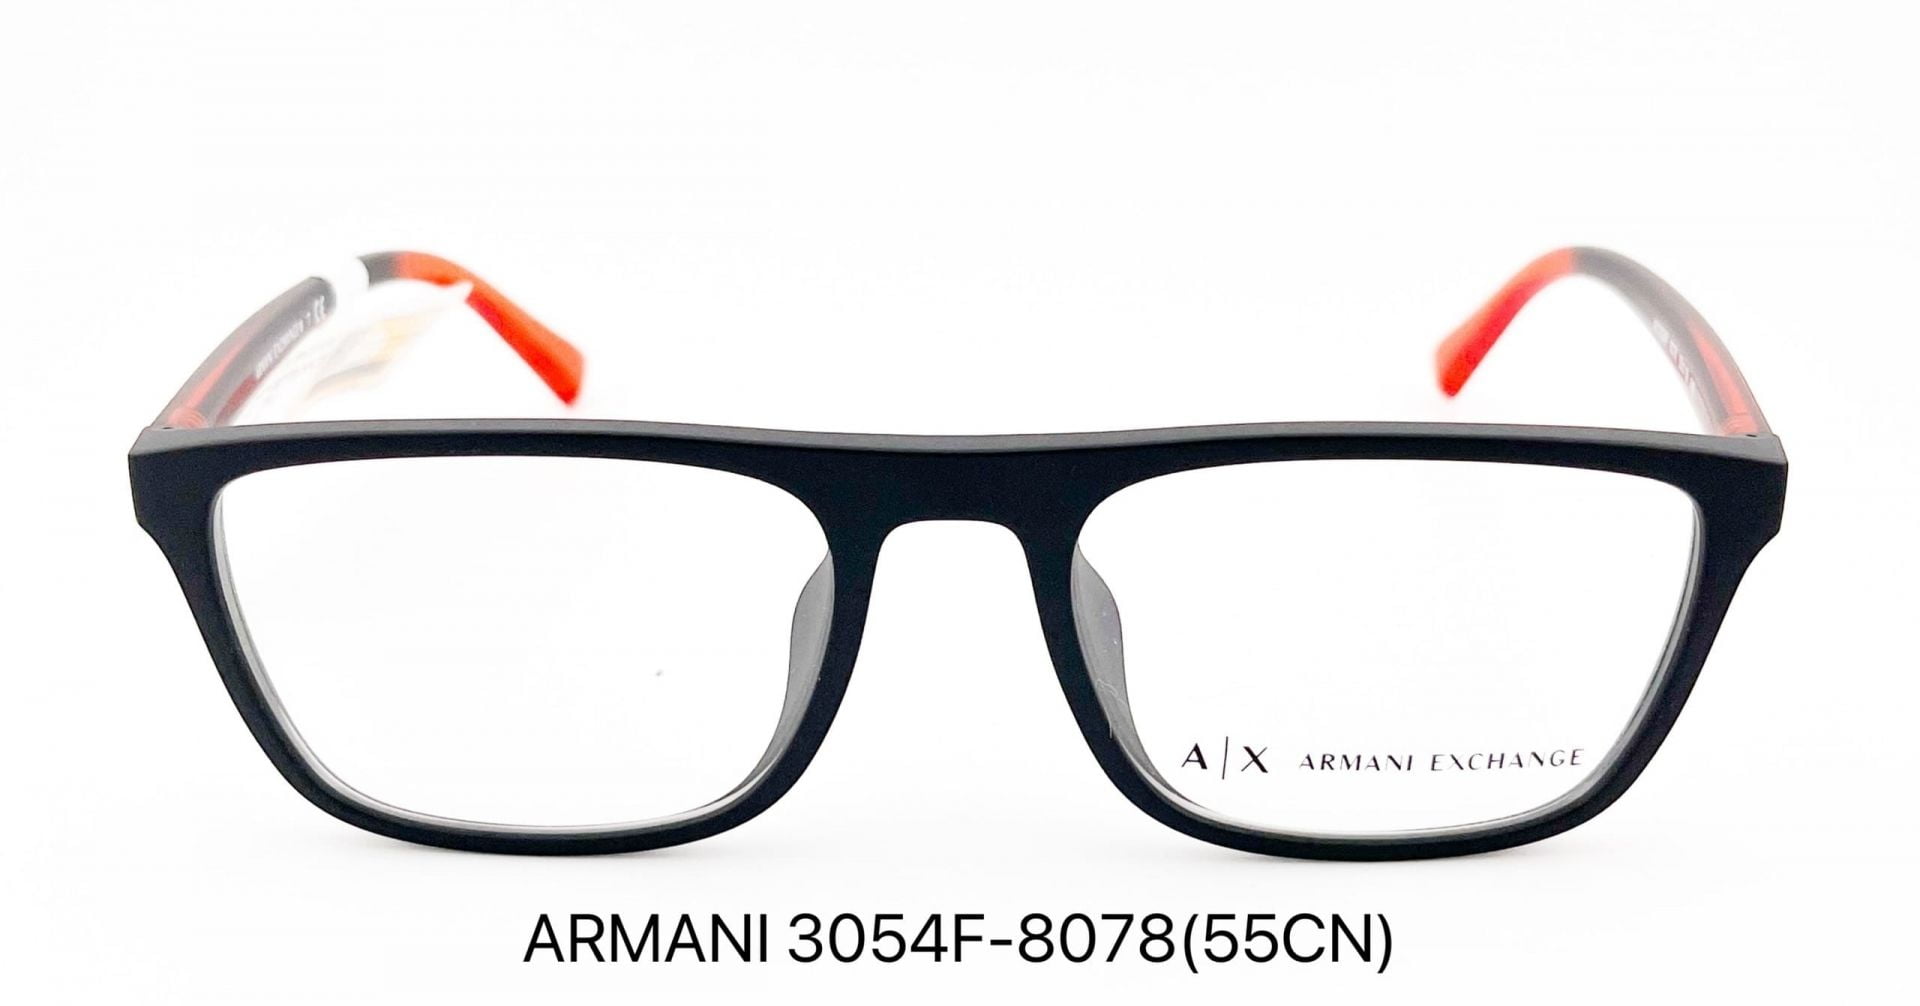 Gọng kính ARMANI EXCHANGE 3054F-8078 (55CN)